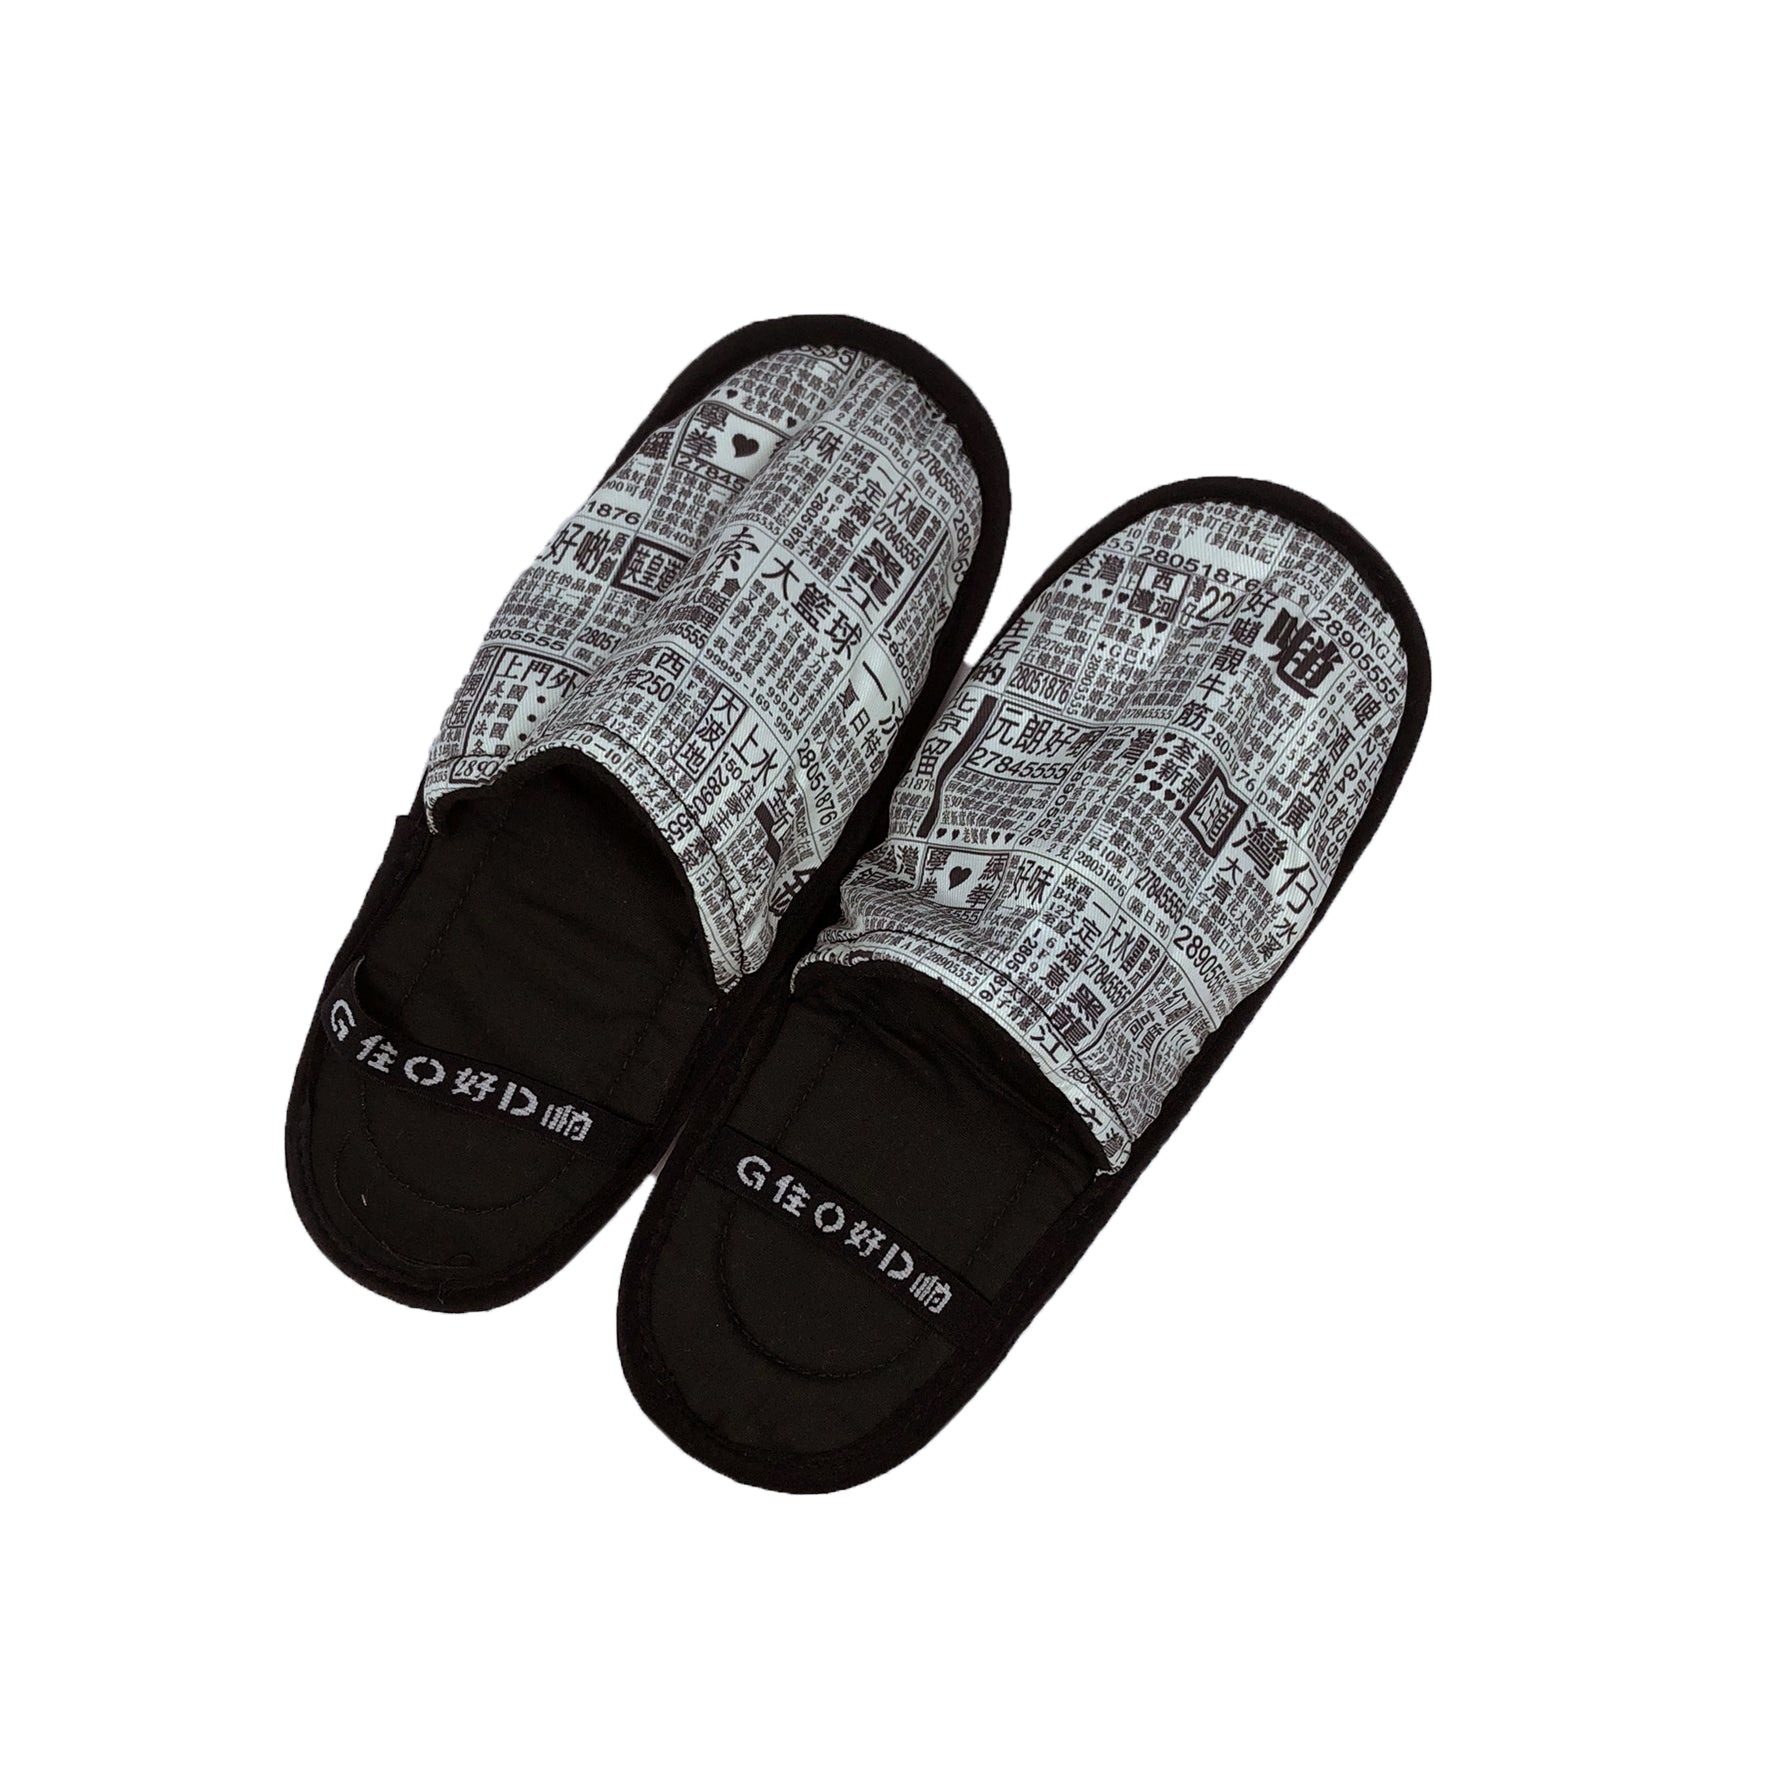 'Newspaper' travel slippers